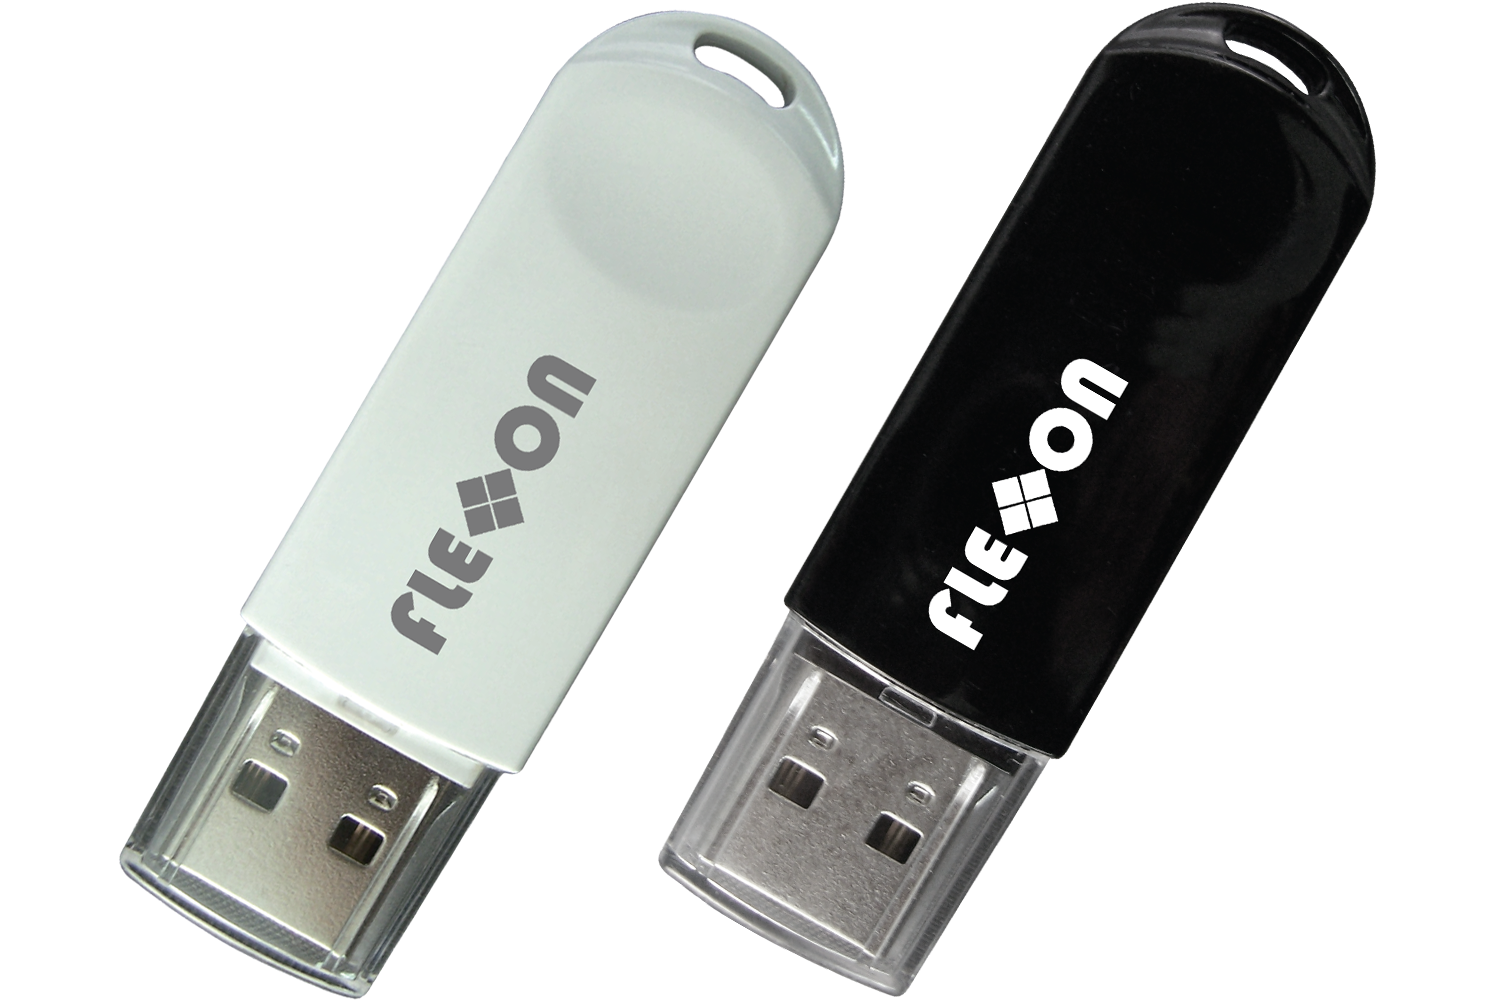 USB-Flash-Laufwerk PNG-Bild